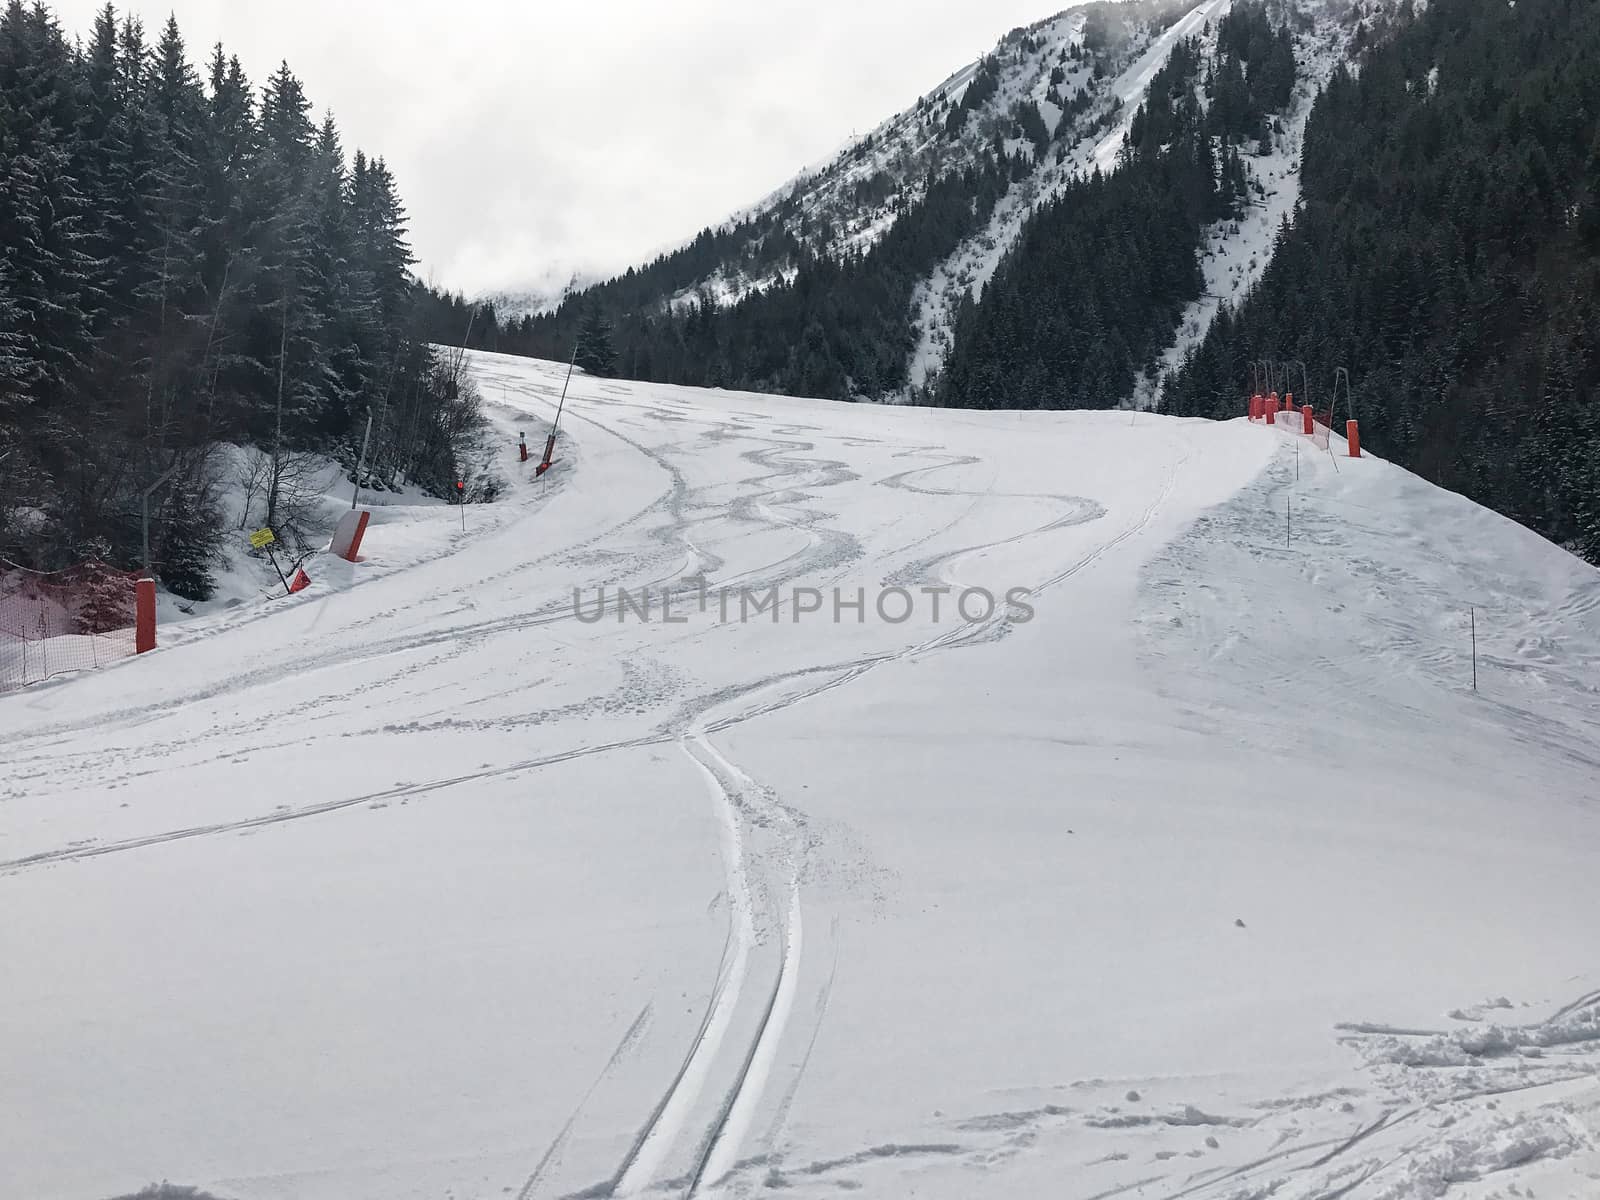 Alps in winter by Kartouchken